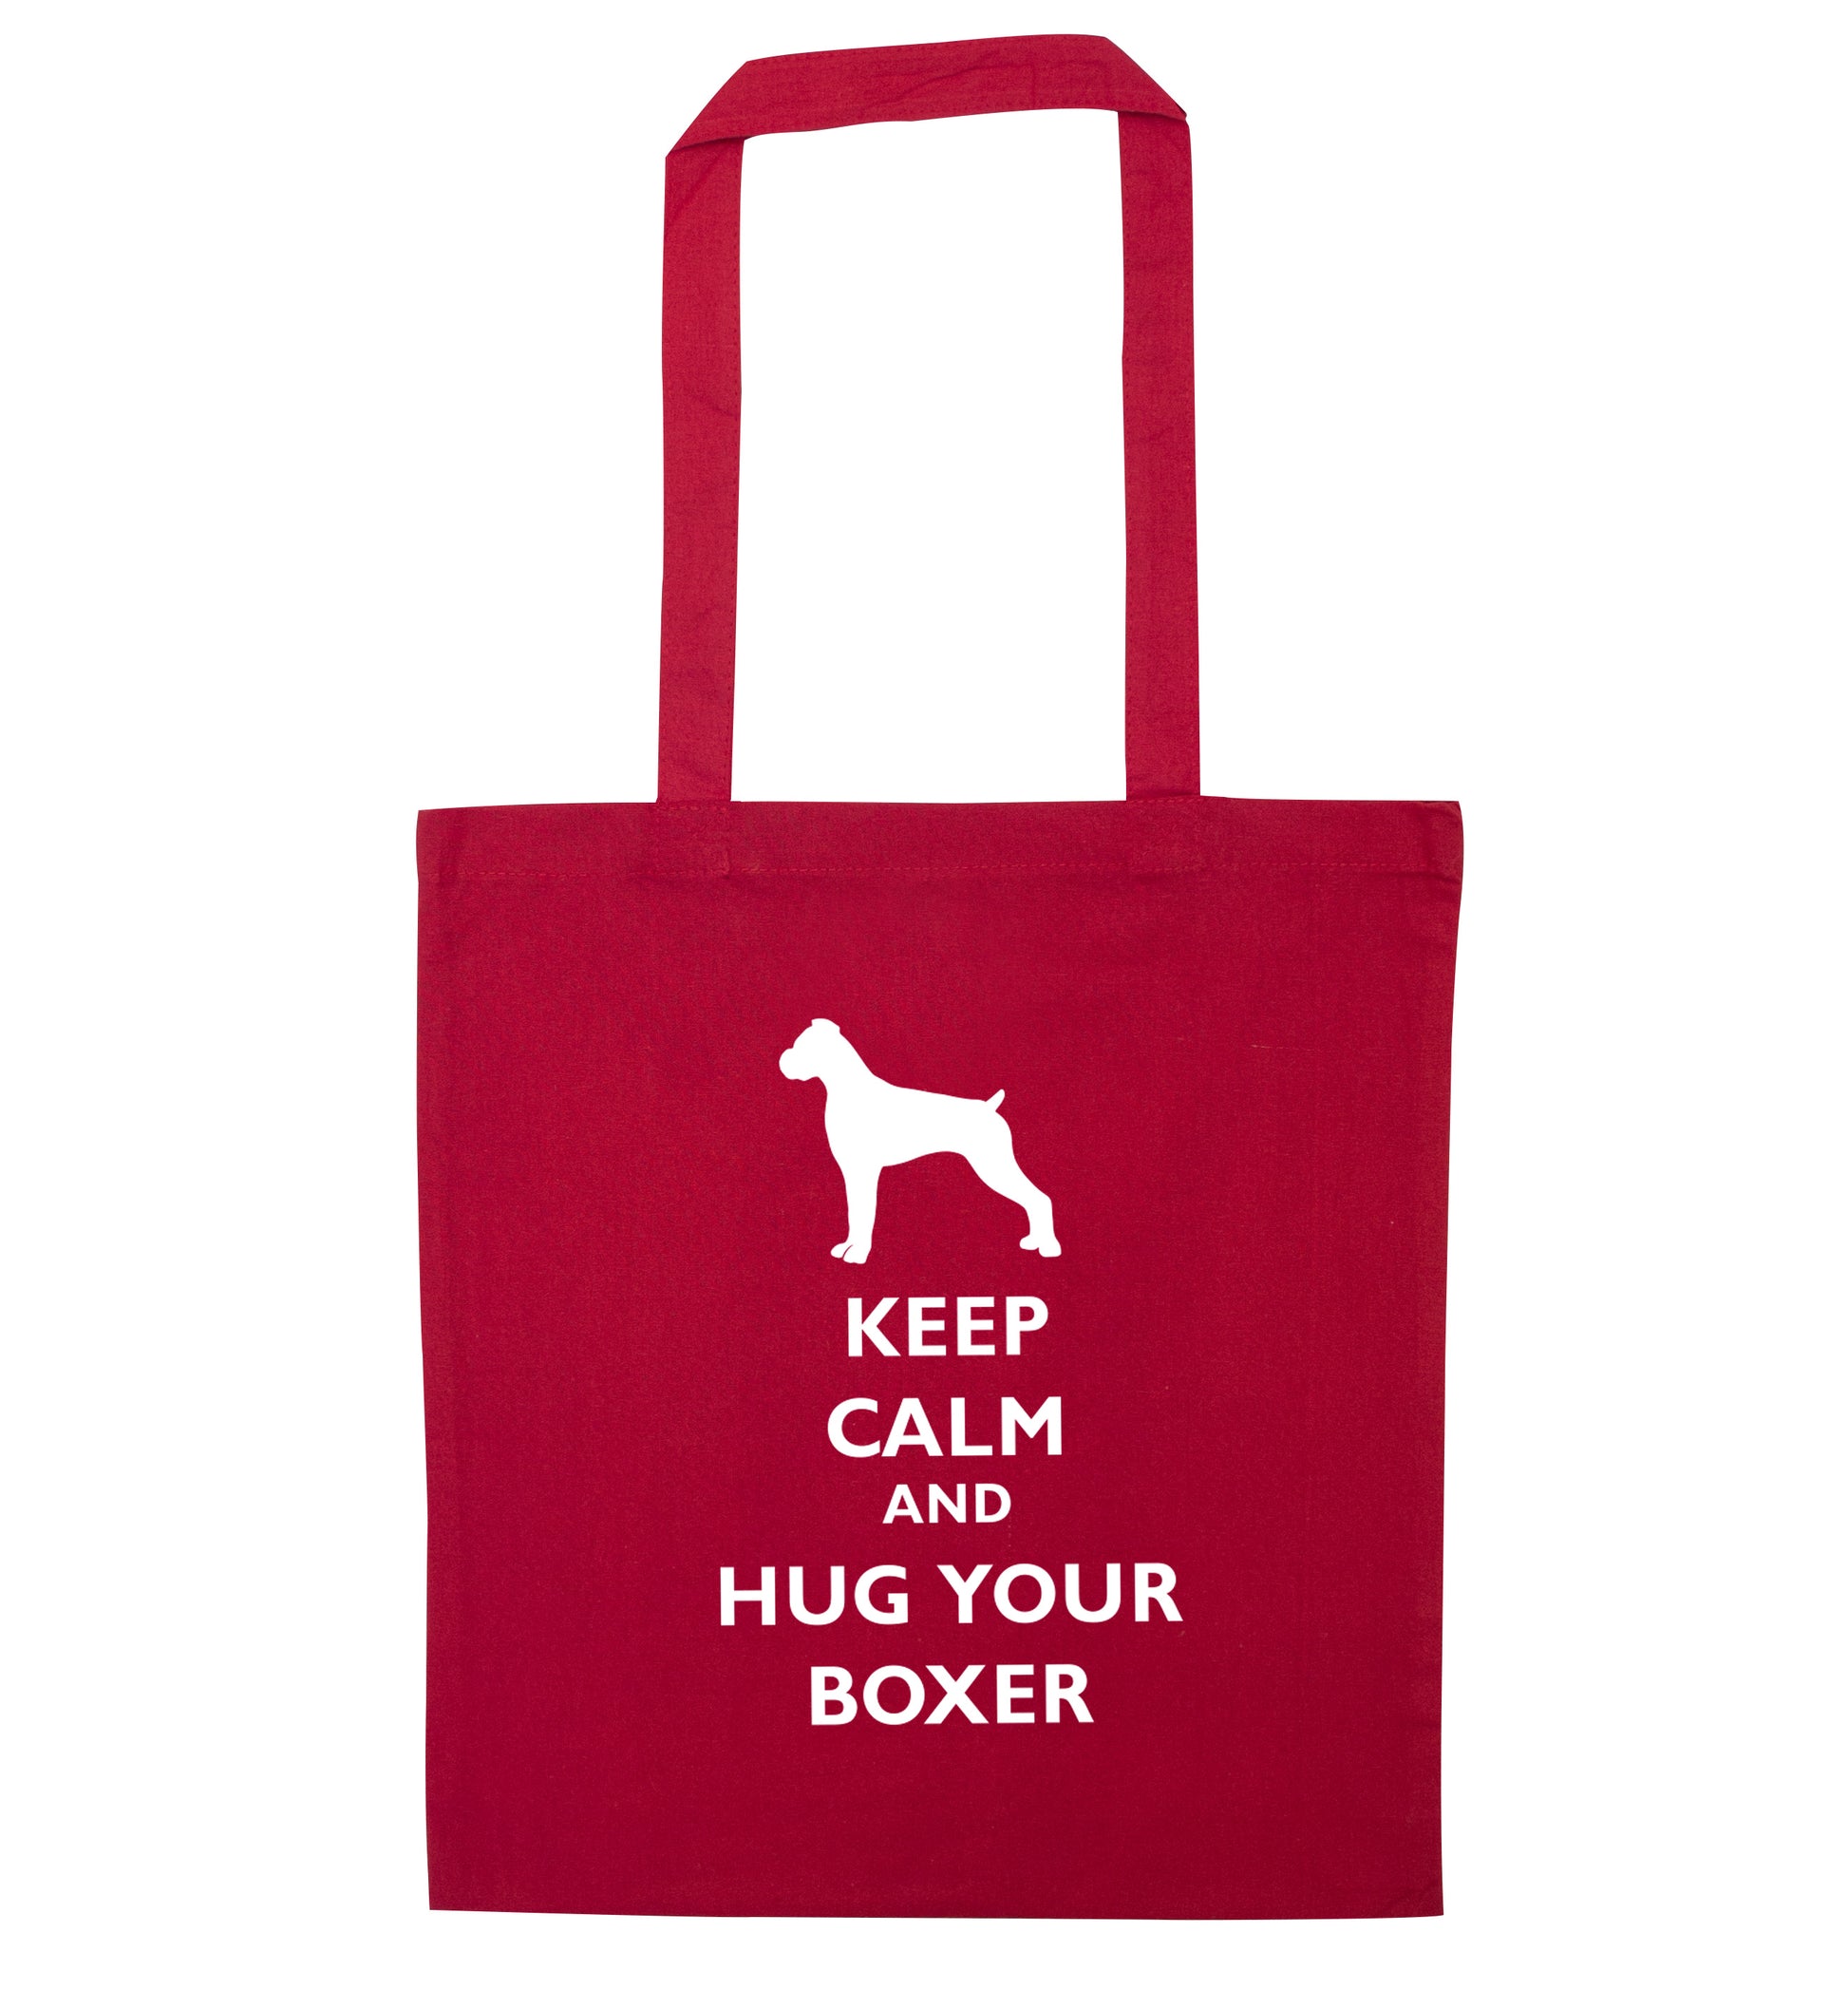 Keep calm and hug your boxer red tote bag